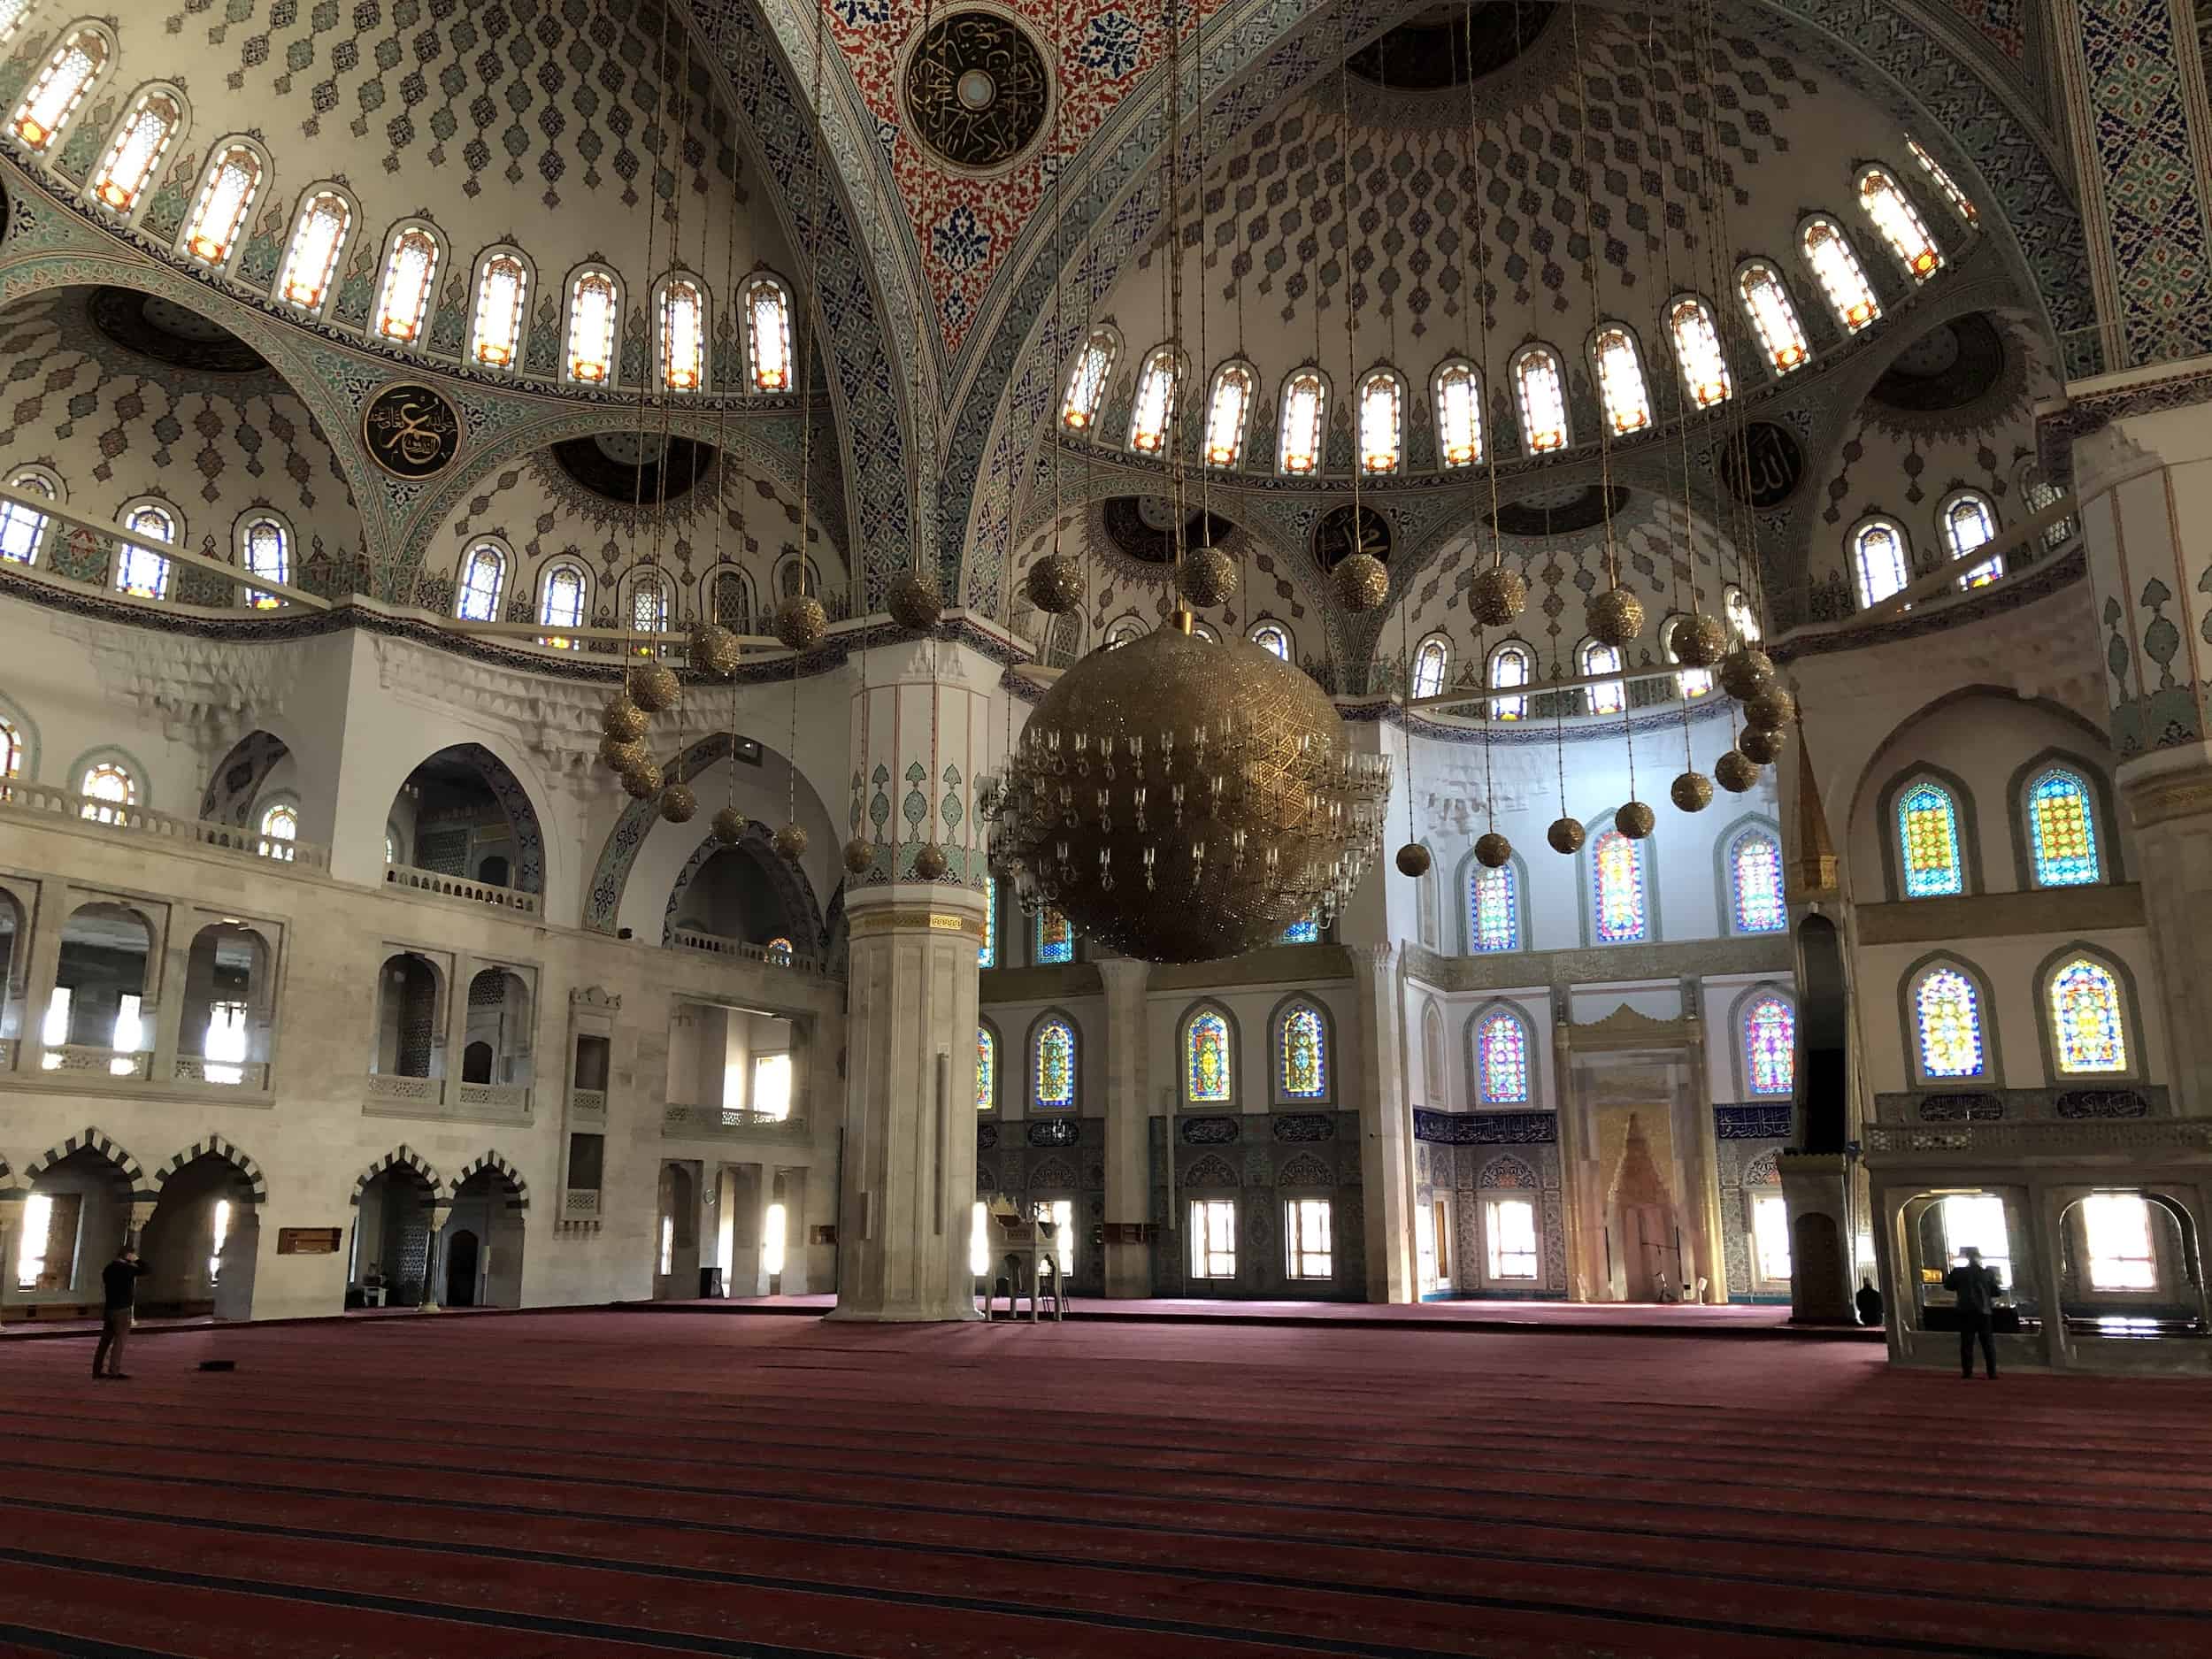 Prayer hall of the Kocatepe Mosque in Kızılay, Ankara, Turkey